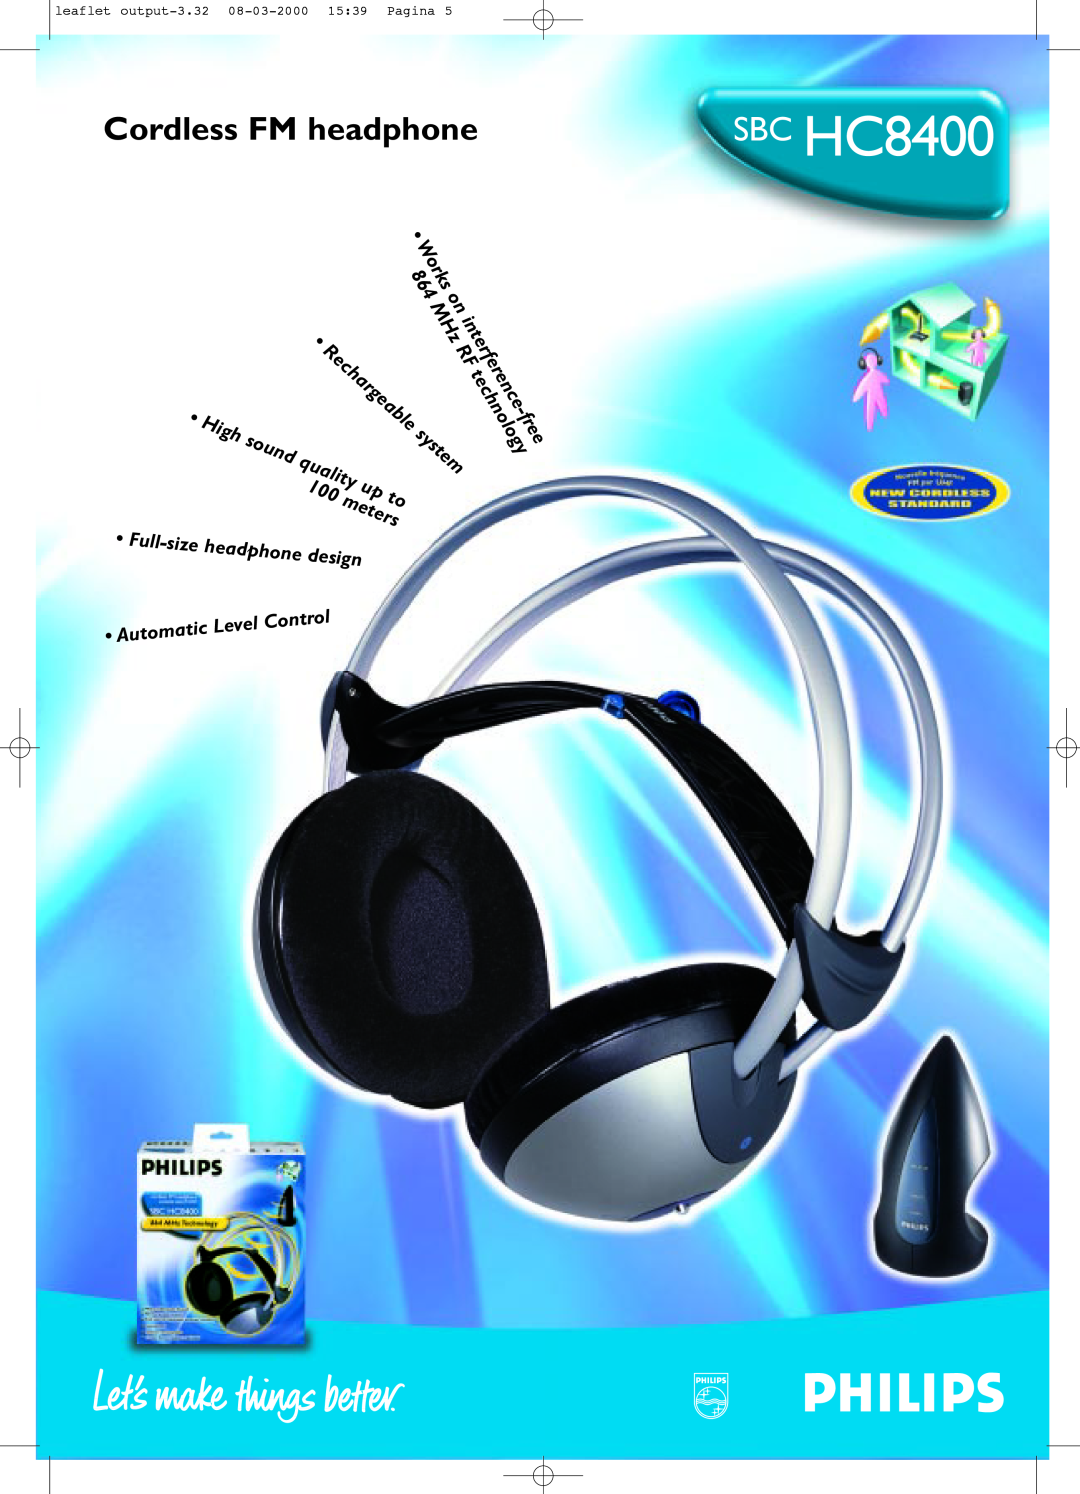 Philips SBCHC8400 manual SBC HC8400, Cordless FM headphone, Works, system, free, Full-sizeheadphone design, interference 